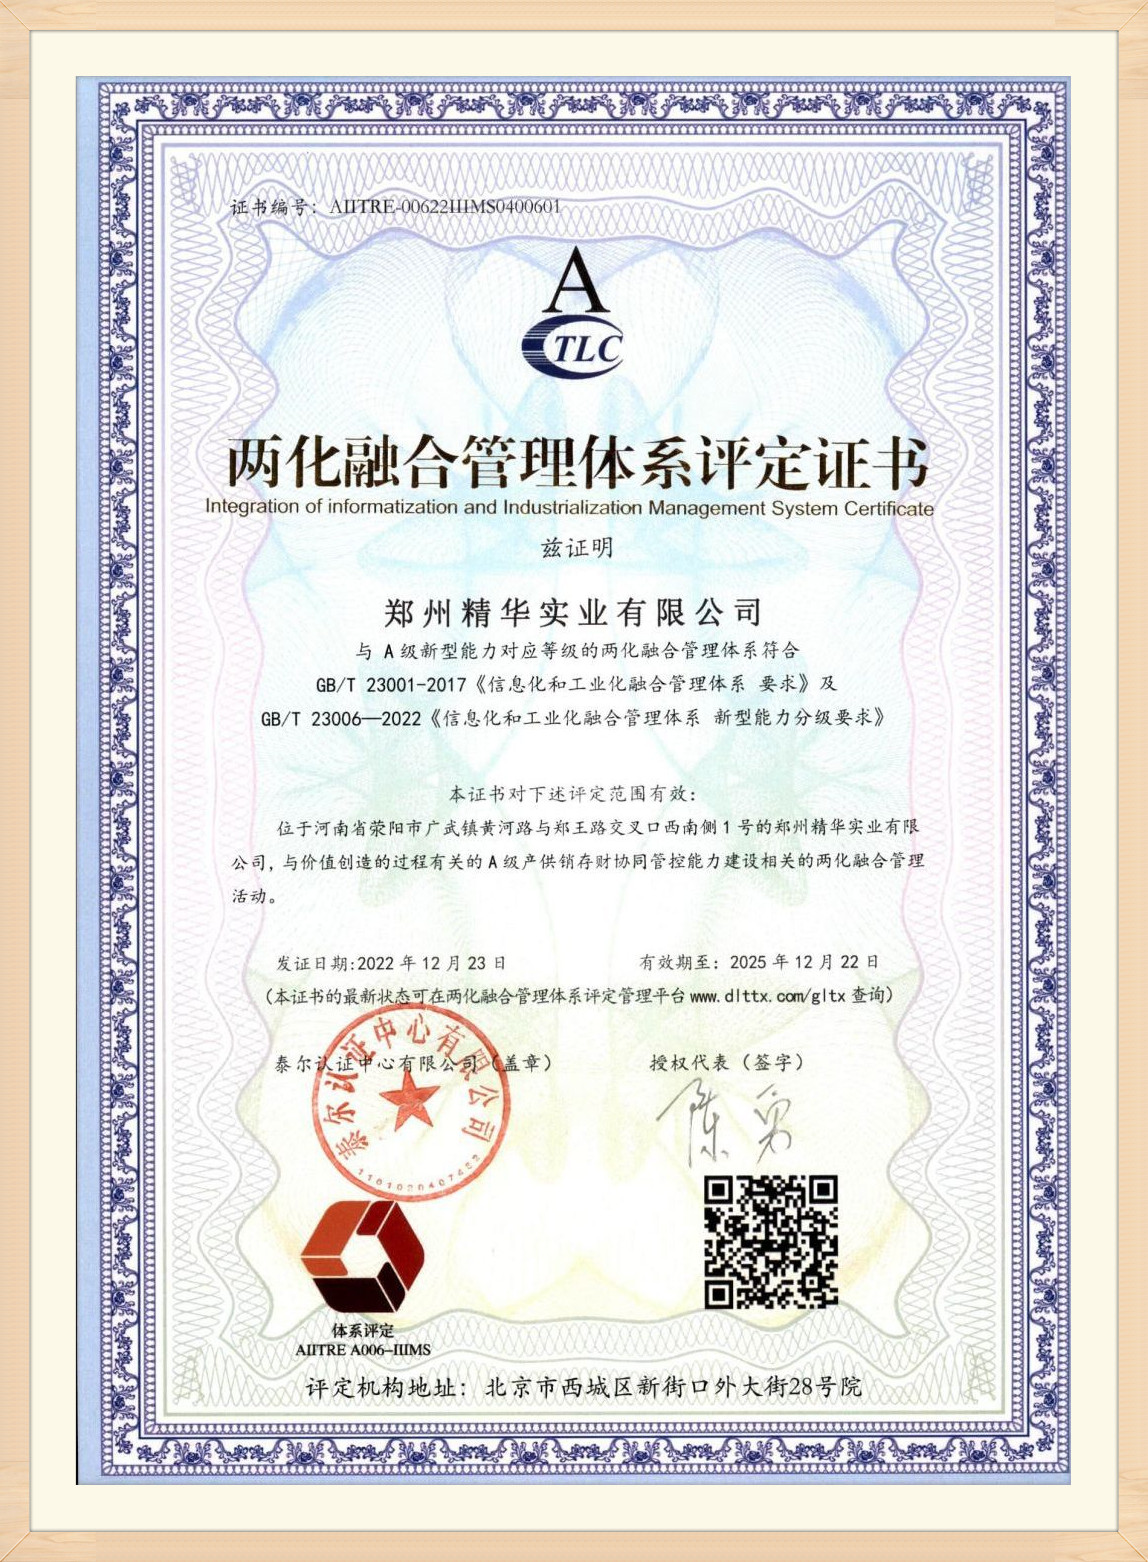 Qualification Certificate (4)